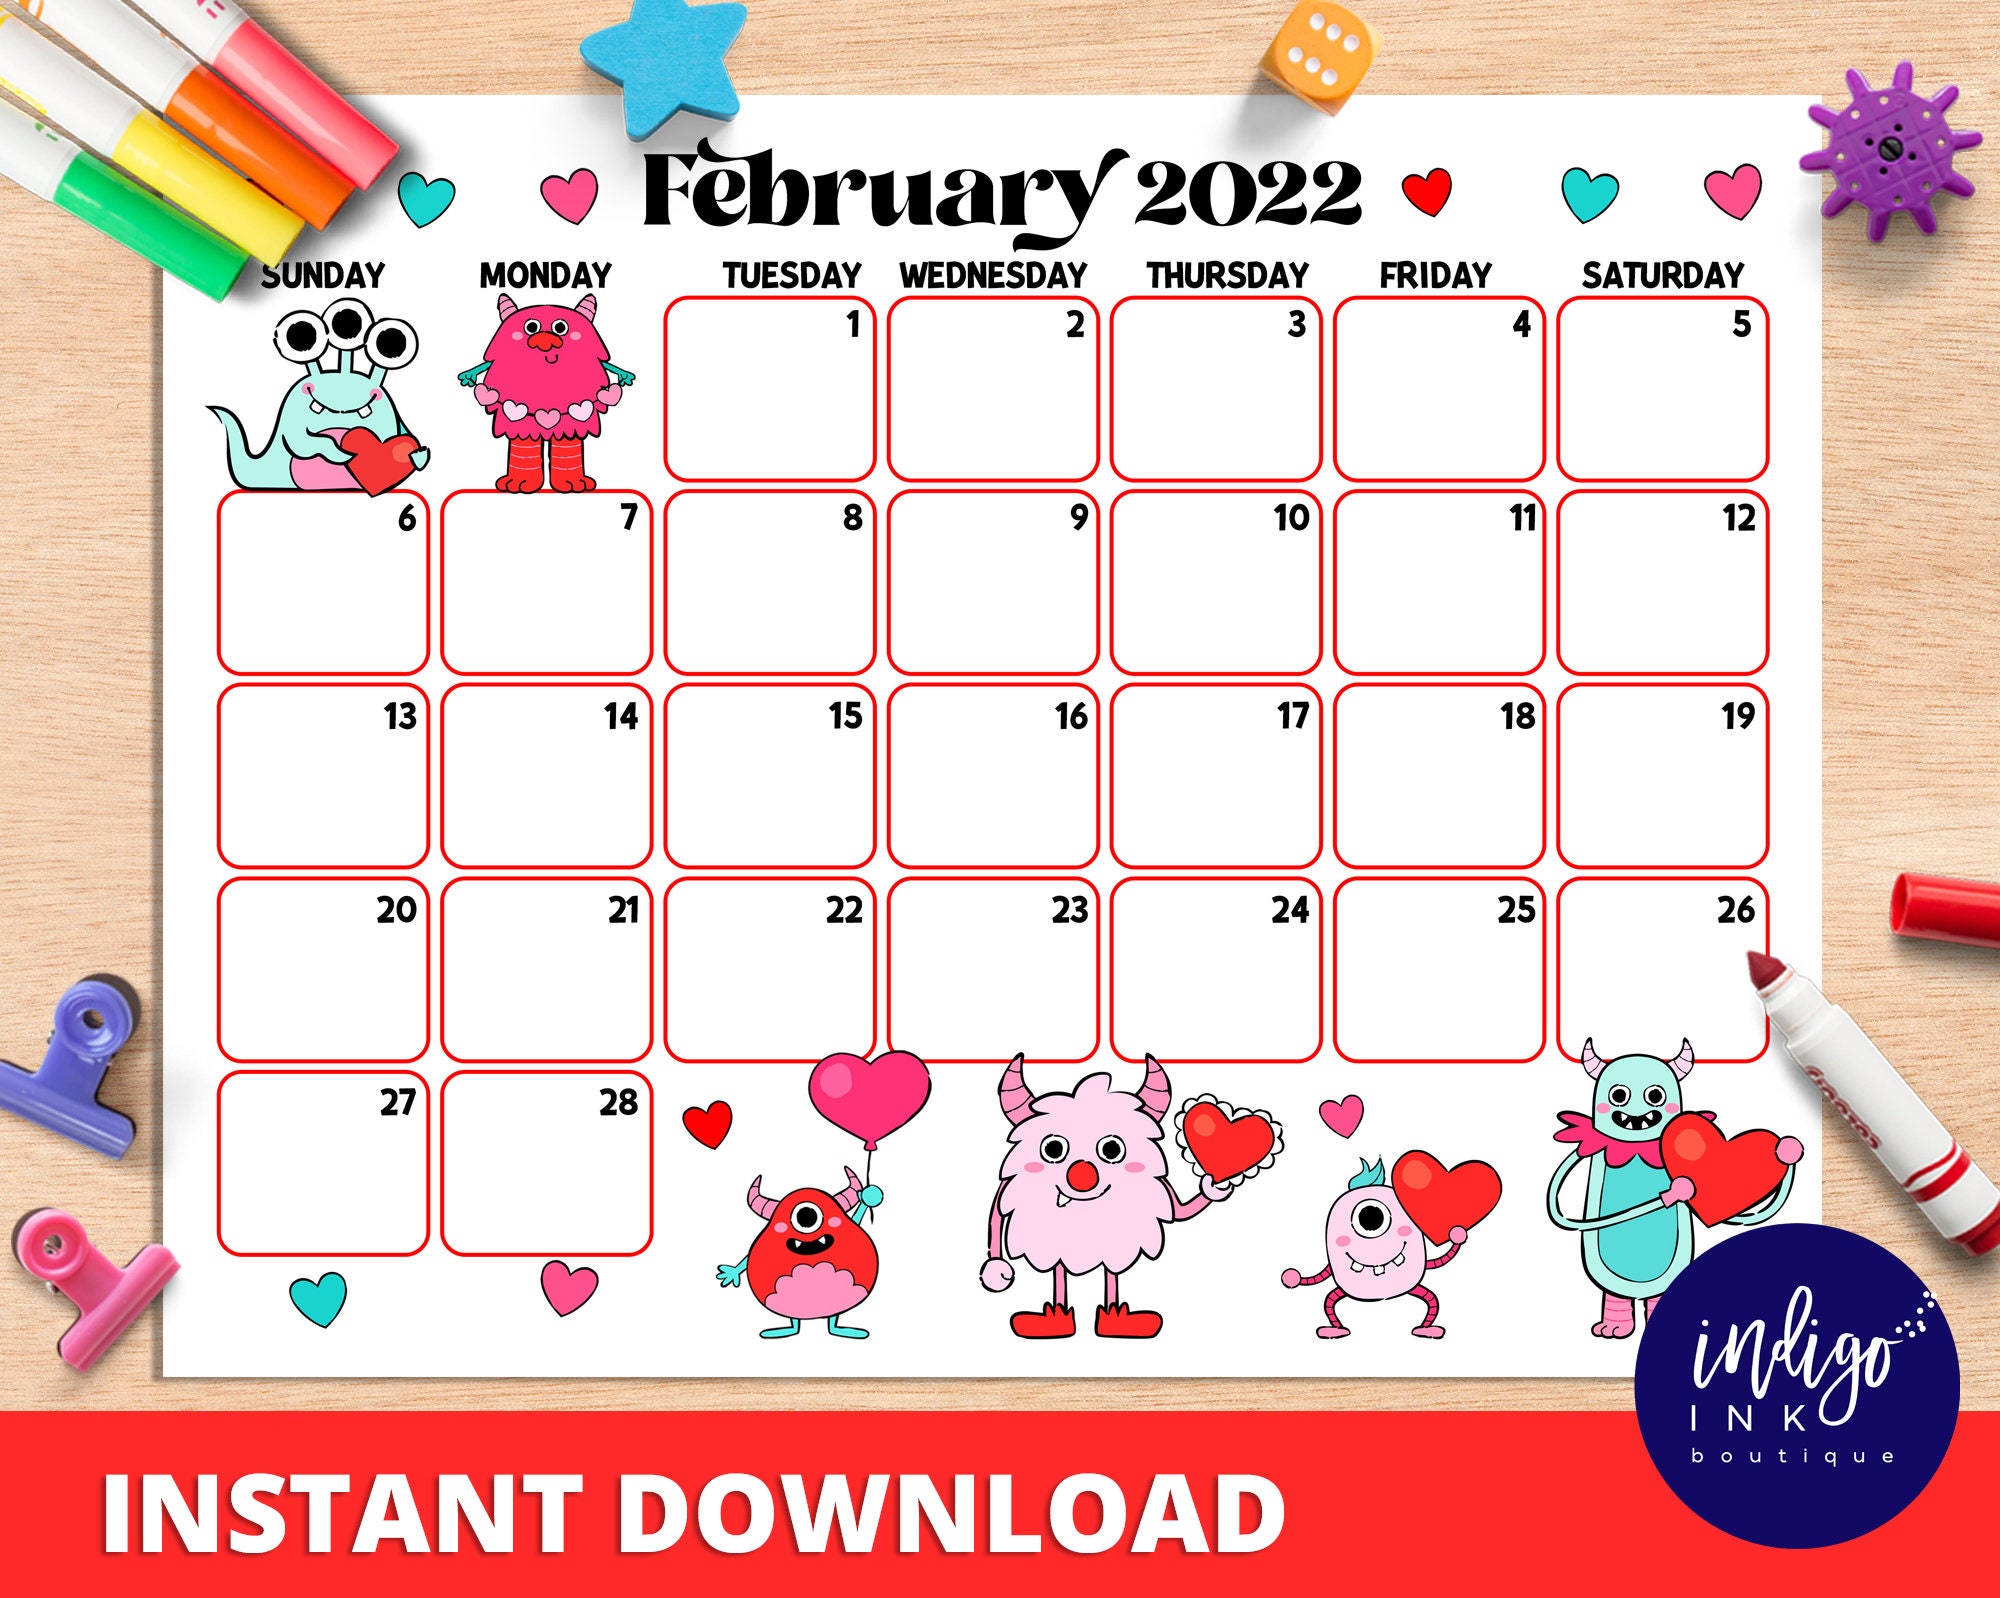 Feb 2022 Calendar Printable February 2022 Calendar Instant Download Monthly Planner | Etsy Singapore